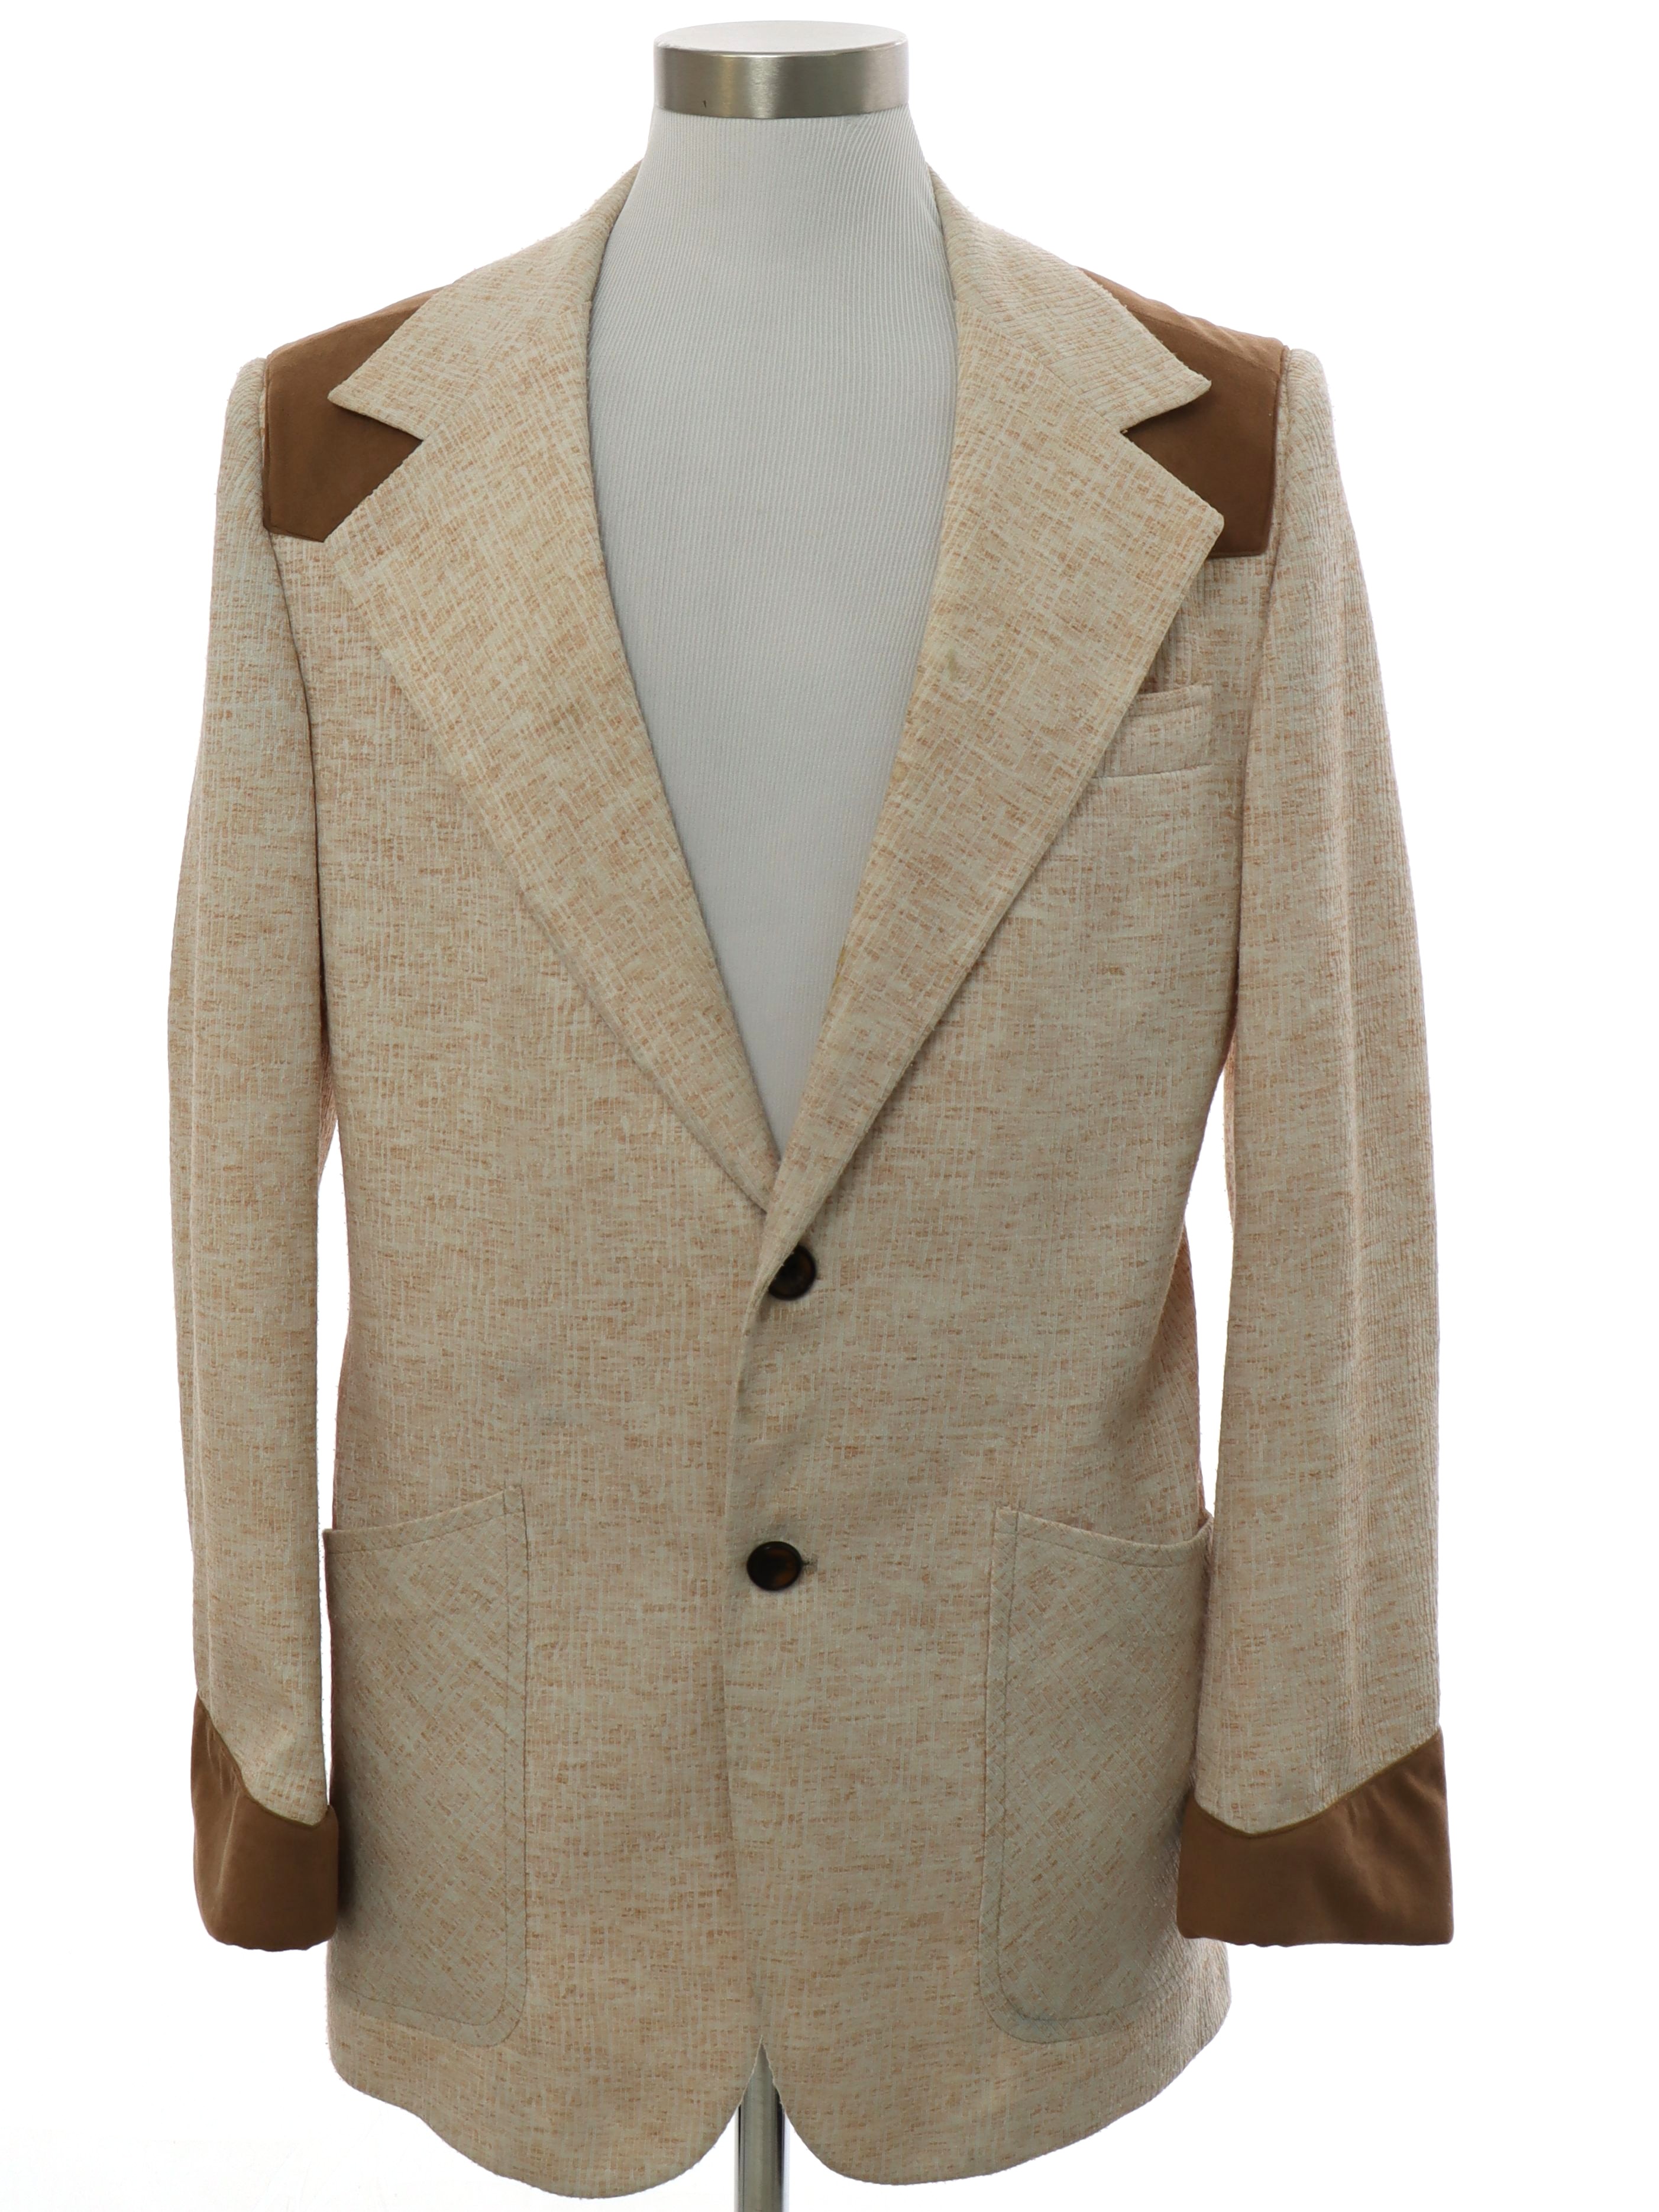 Sears Seventies Vintage Jacket: 70s -Sears- Mens ivory and tan textured ...